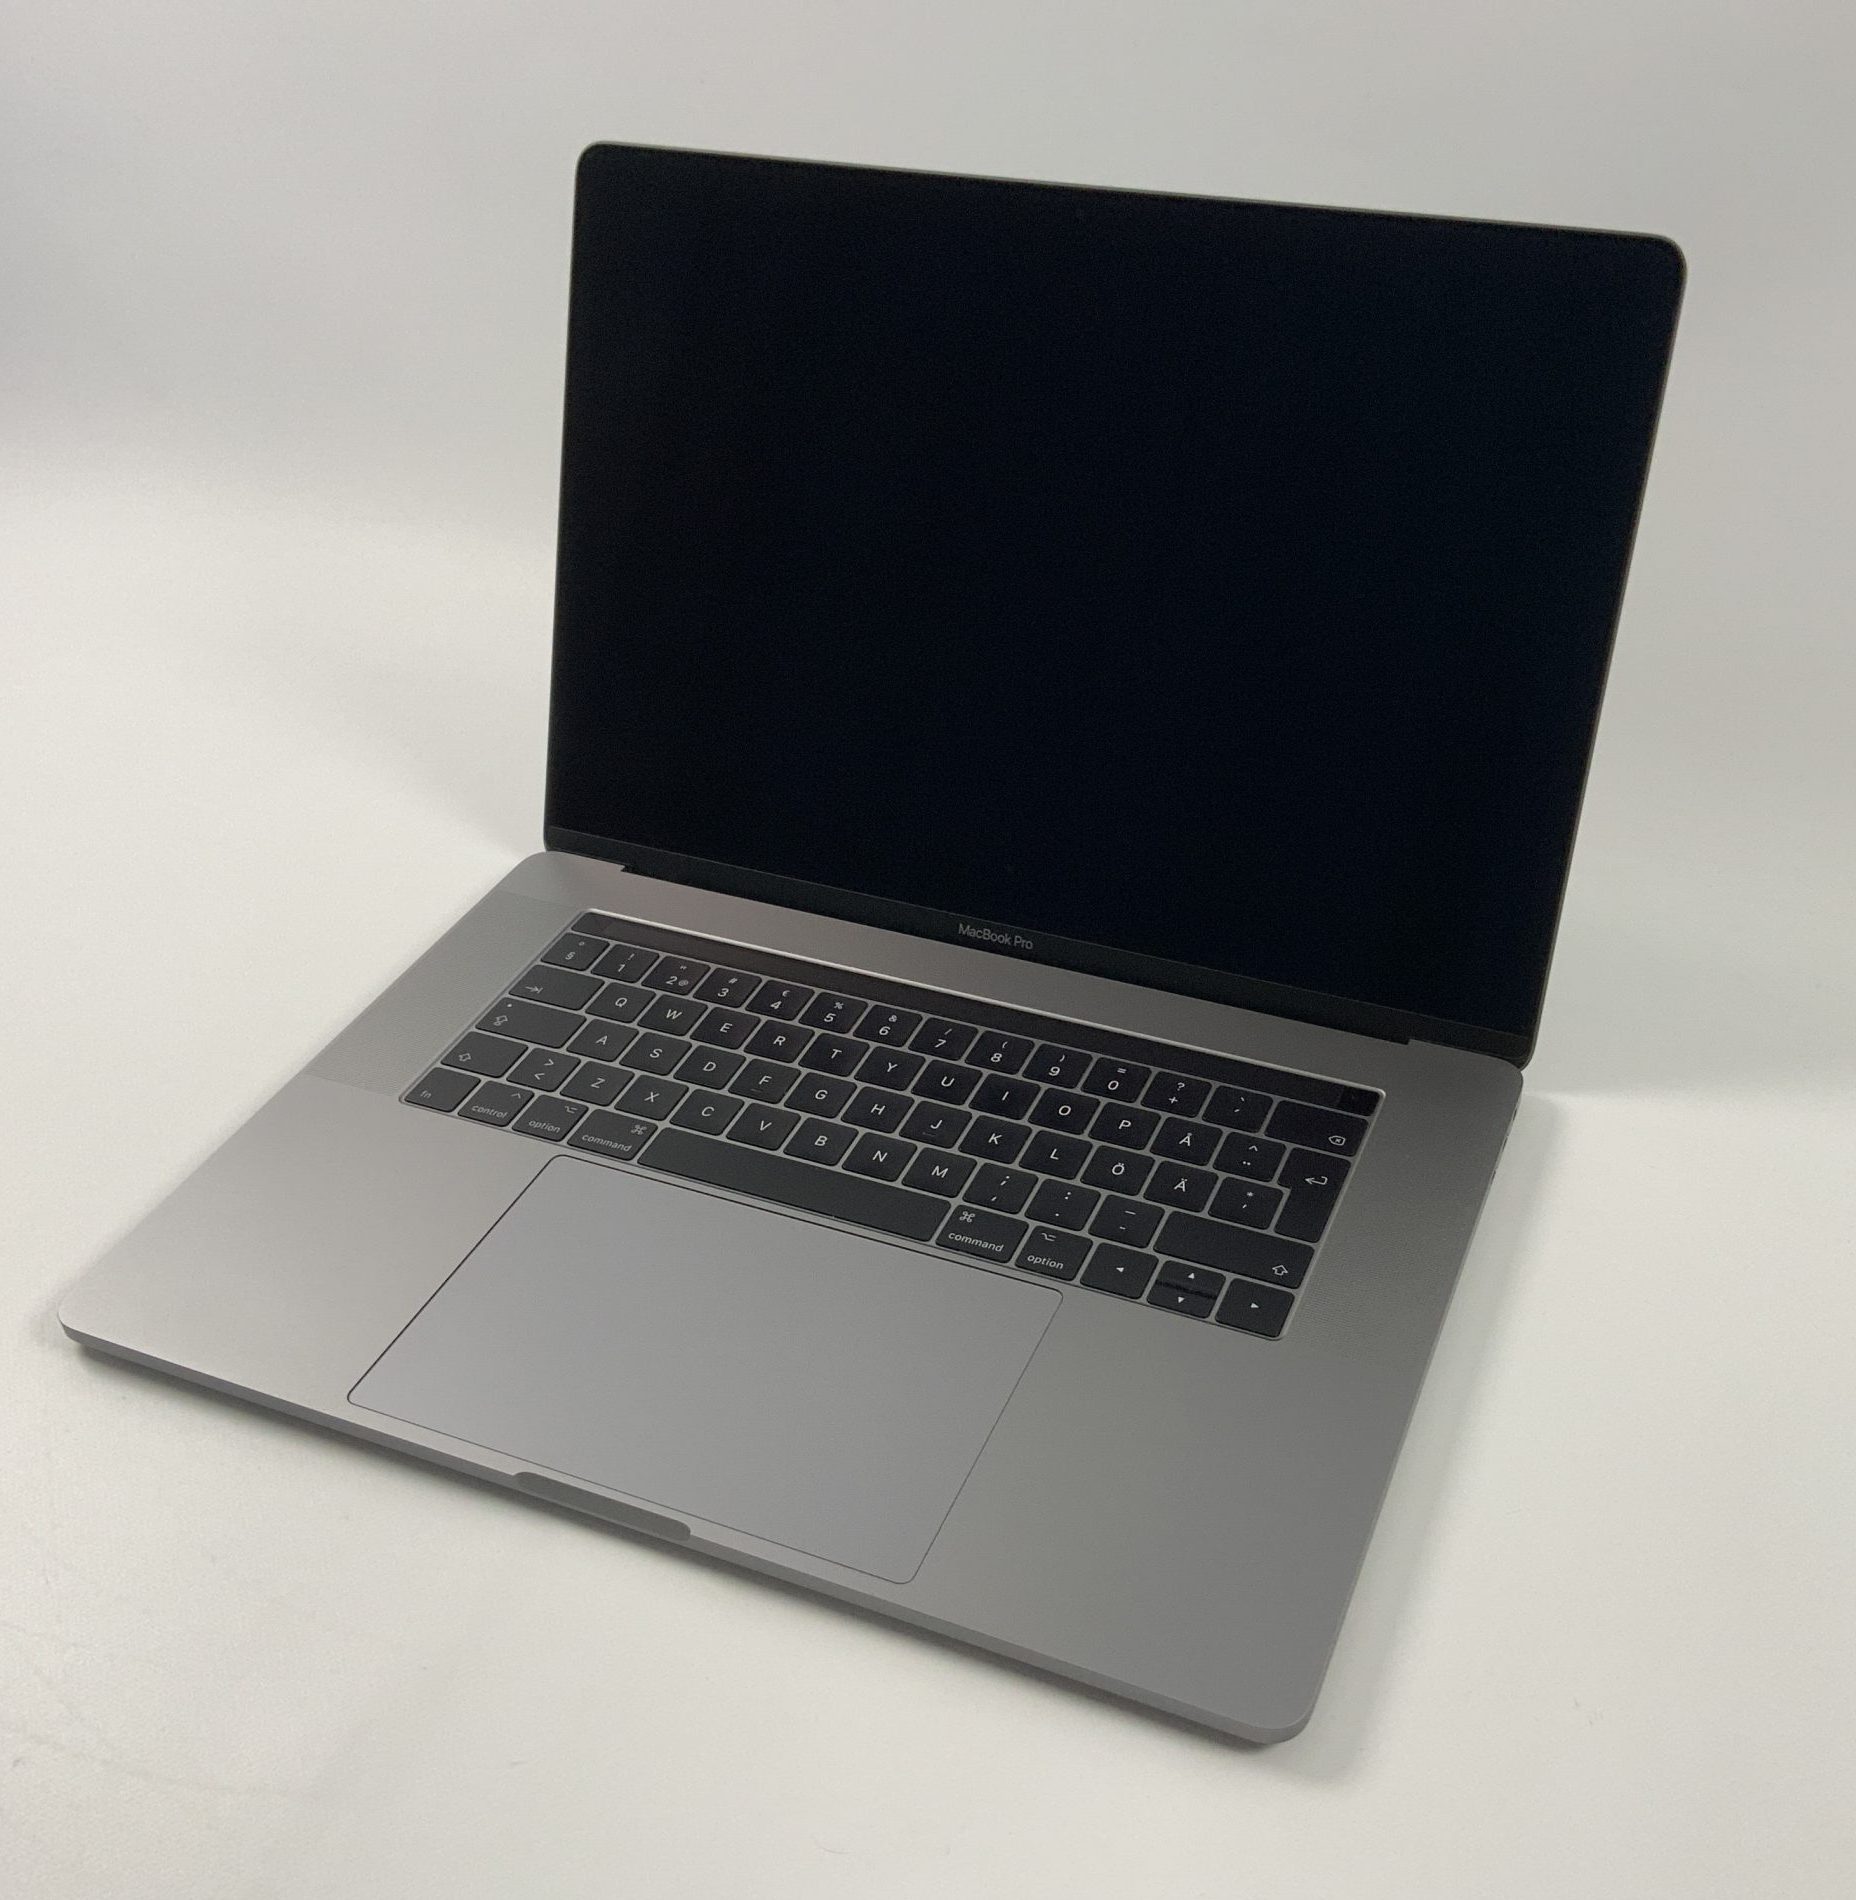 MacBook Pro 15" Touch Bar Mid 2017 (Intel Quad-Core i7 2.8 GHz 16 GB RAM 256 GB SSD), Space Gray, Intel Quad-Core i7 2.8 GHz, 16 GB RAM, 256 GB SSD, Afbeelding 1